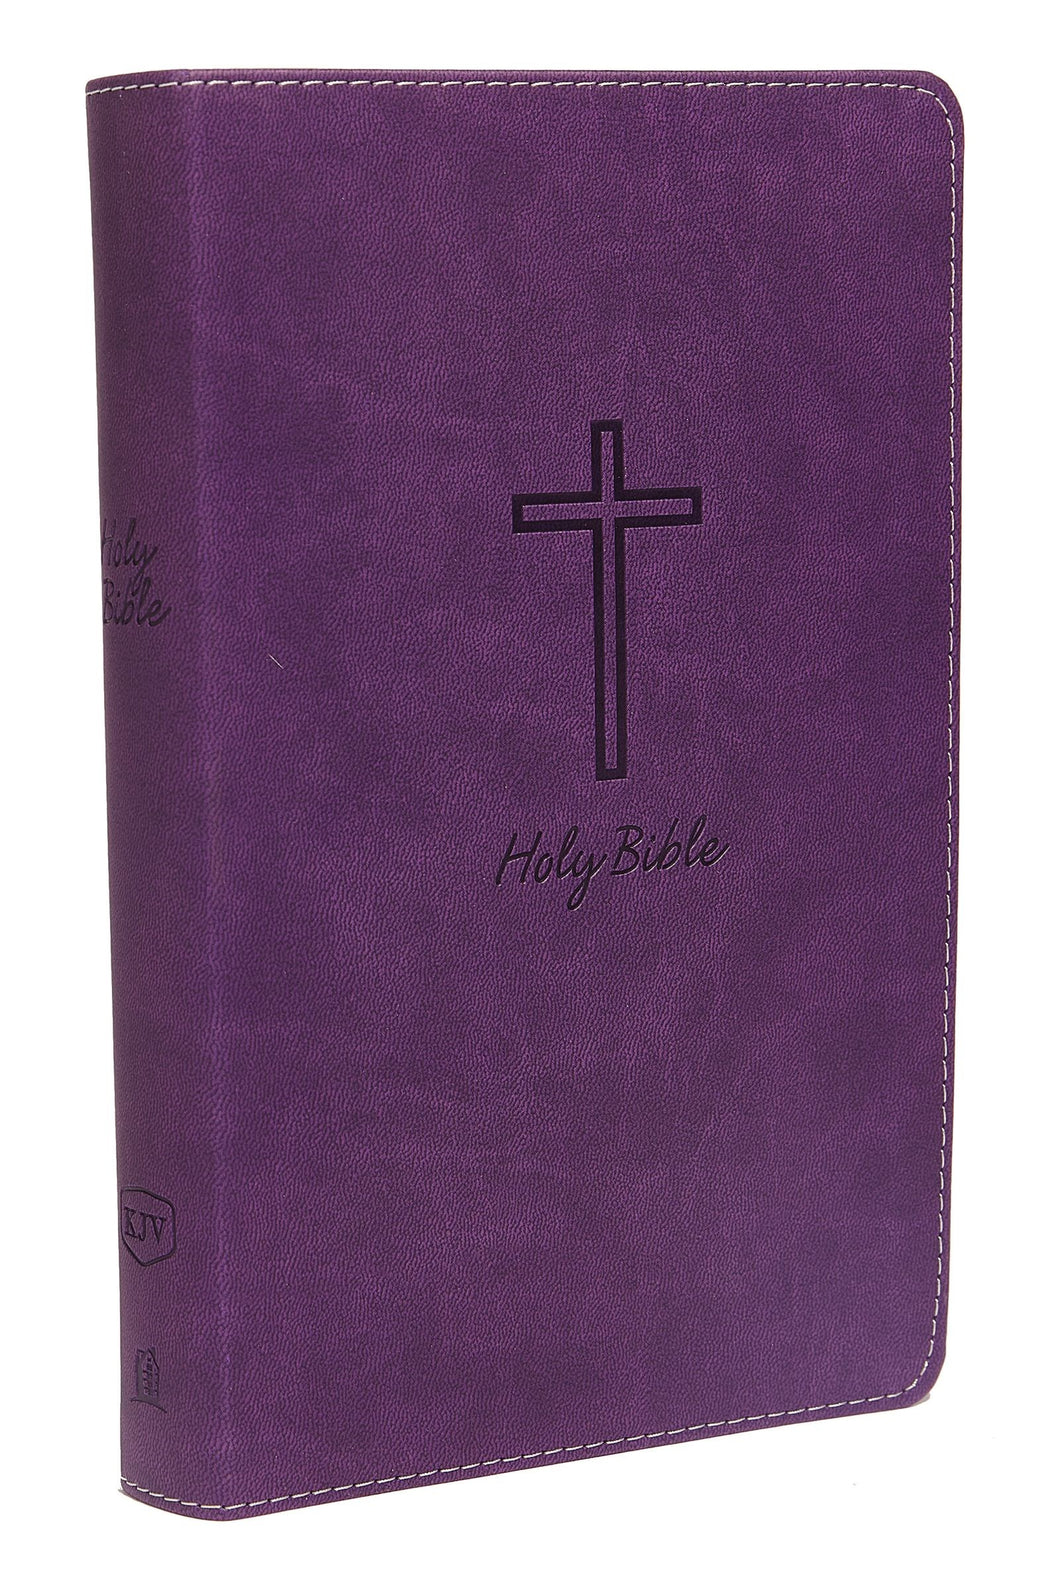 KJV Deluxe Gift Bible (Comfort Print)-Purple Leathersoft